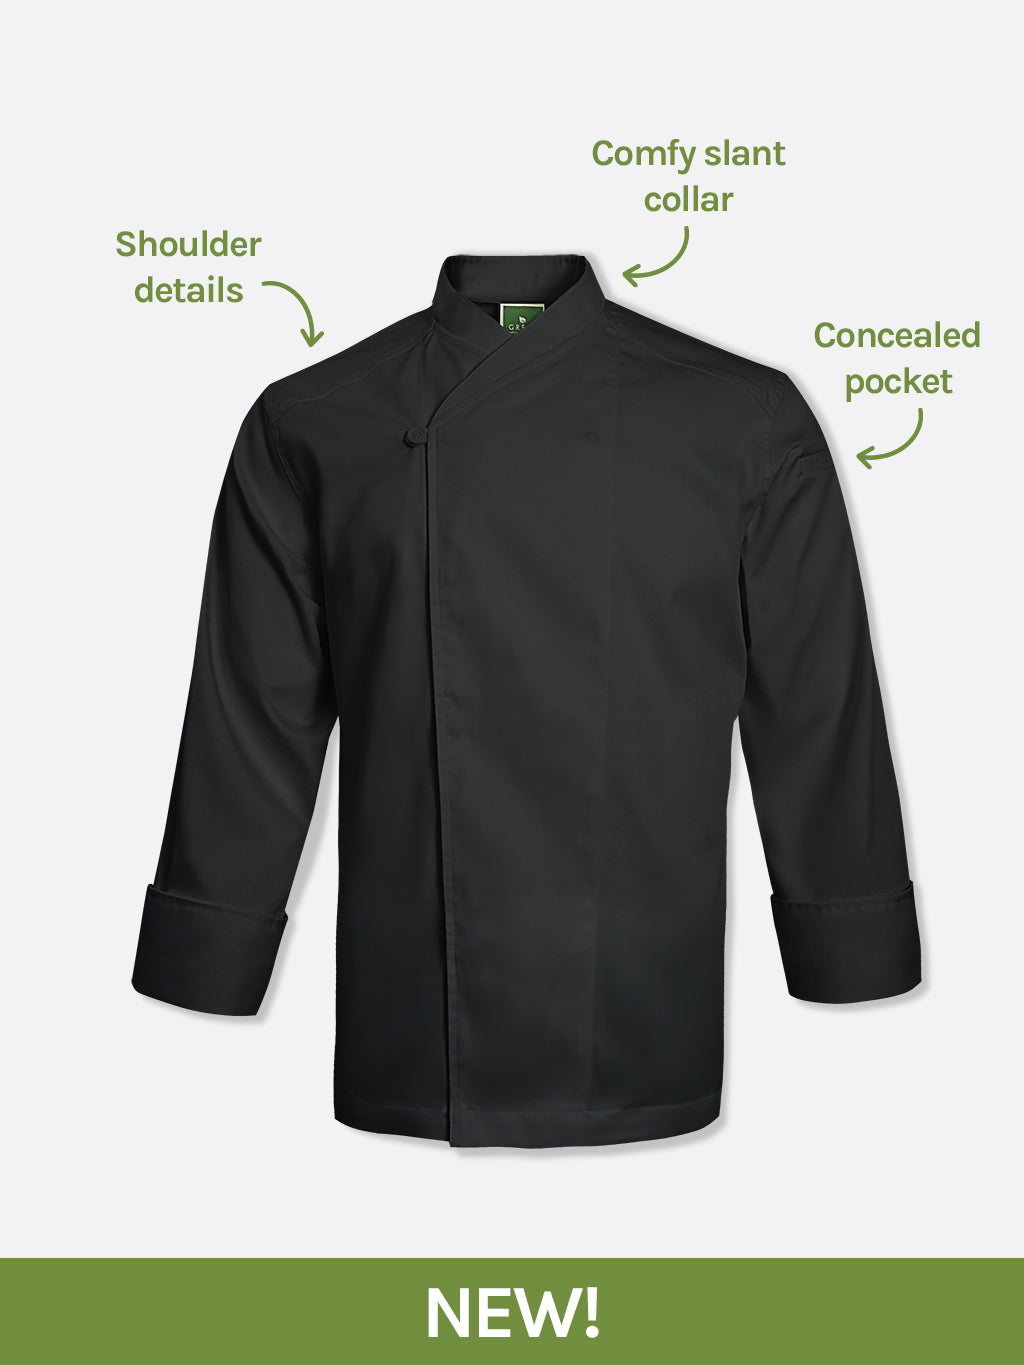 GC Collective — Banyan Black Chef Jacket, Long Sleeve – GreenChef